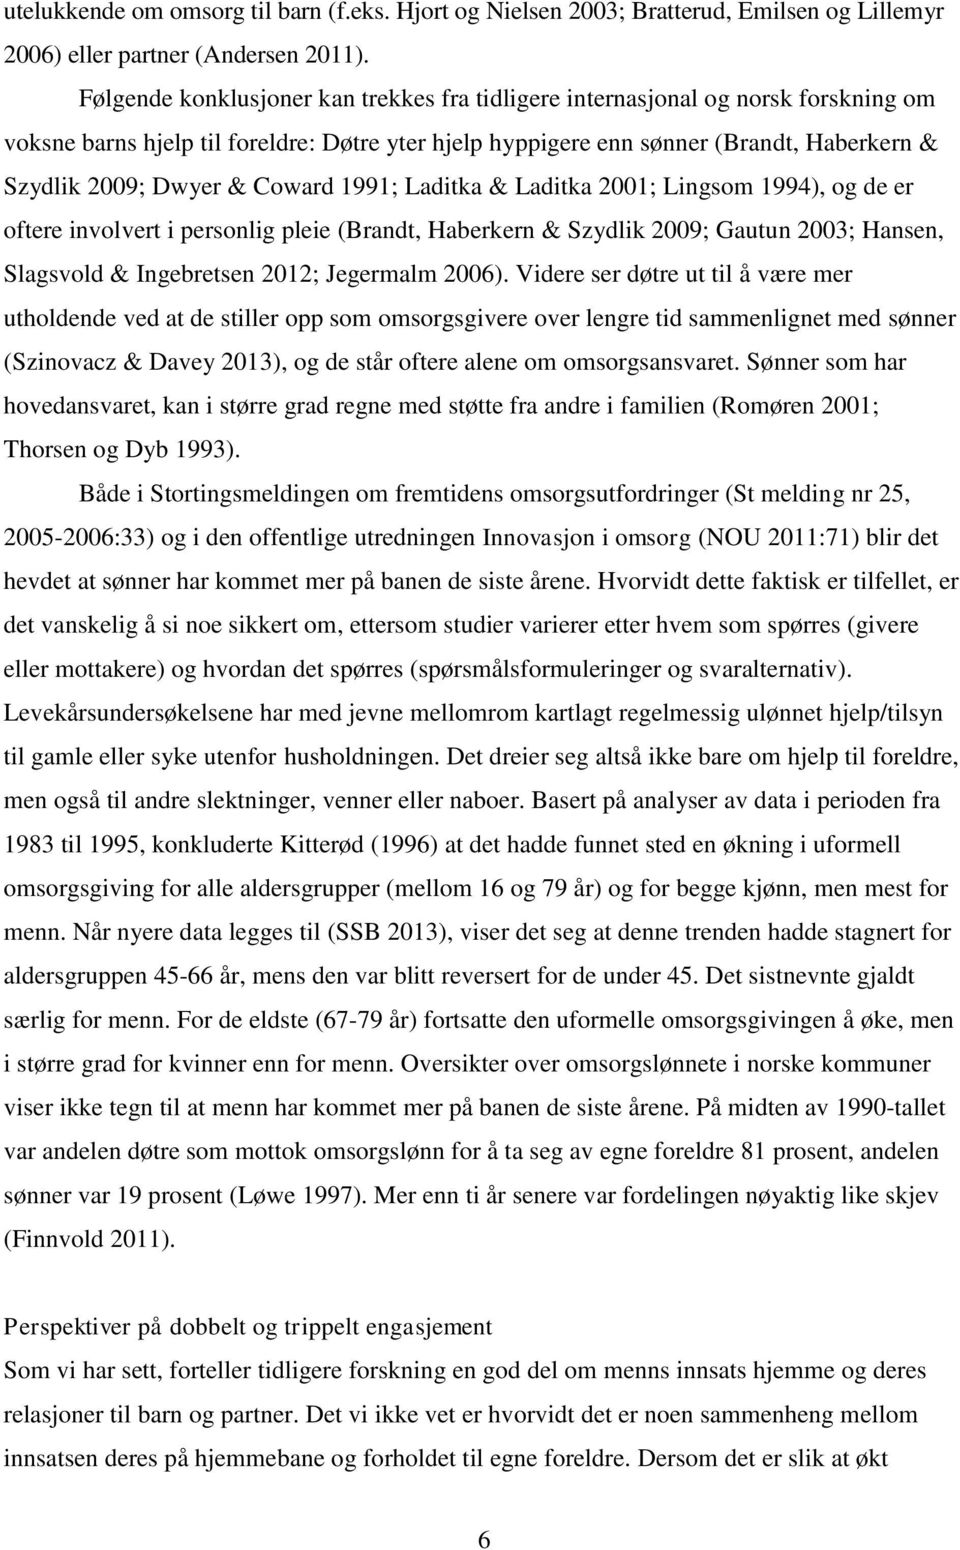 Coward 1991; Laditka & Laditka 2001; Lingsom 1994), og de er oftere involvert i personlig pleie (Brandt, Haberkern & Szydlik 2009; Gautun 2003; Hansen, Slagsvold & Ingebretsen 2012; Jegermalm 2006).